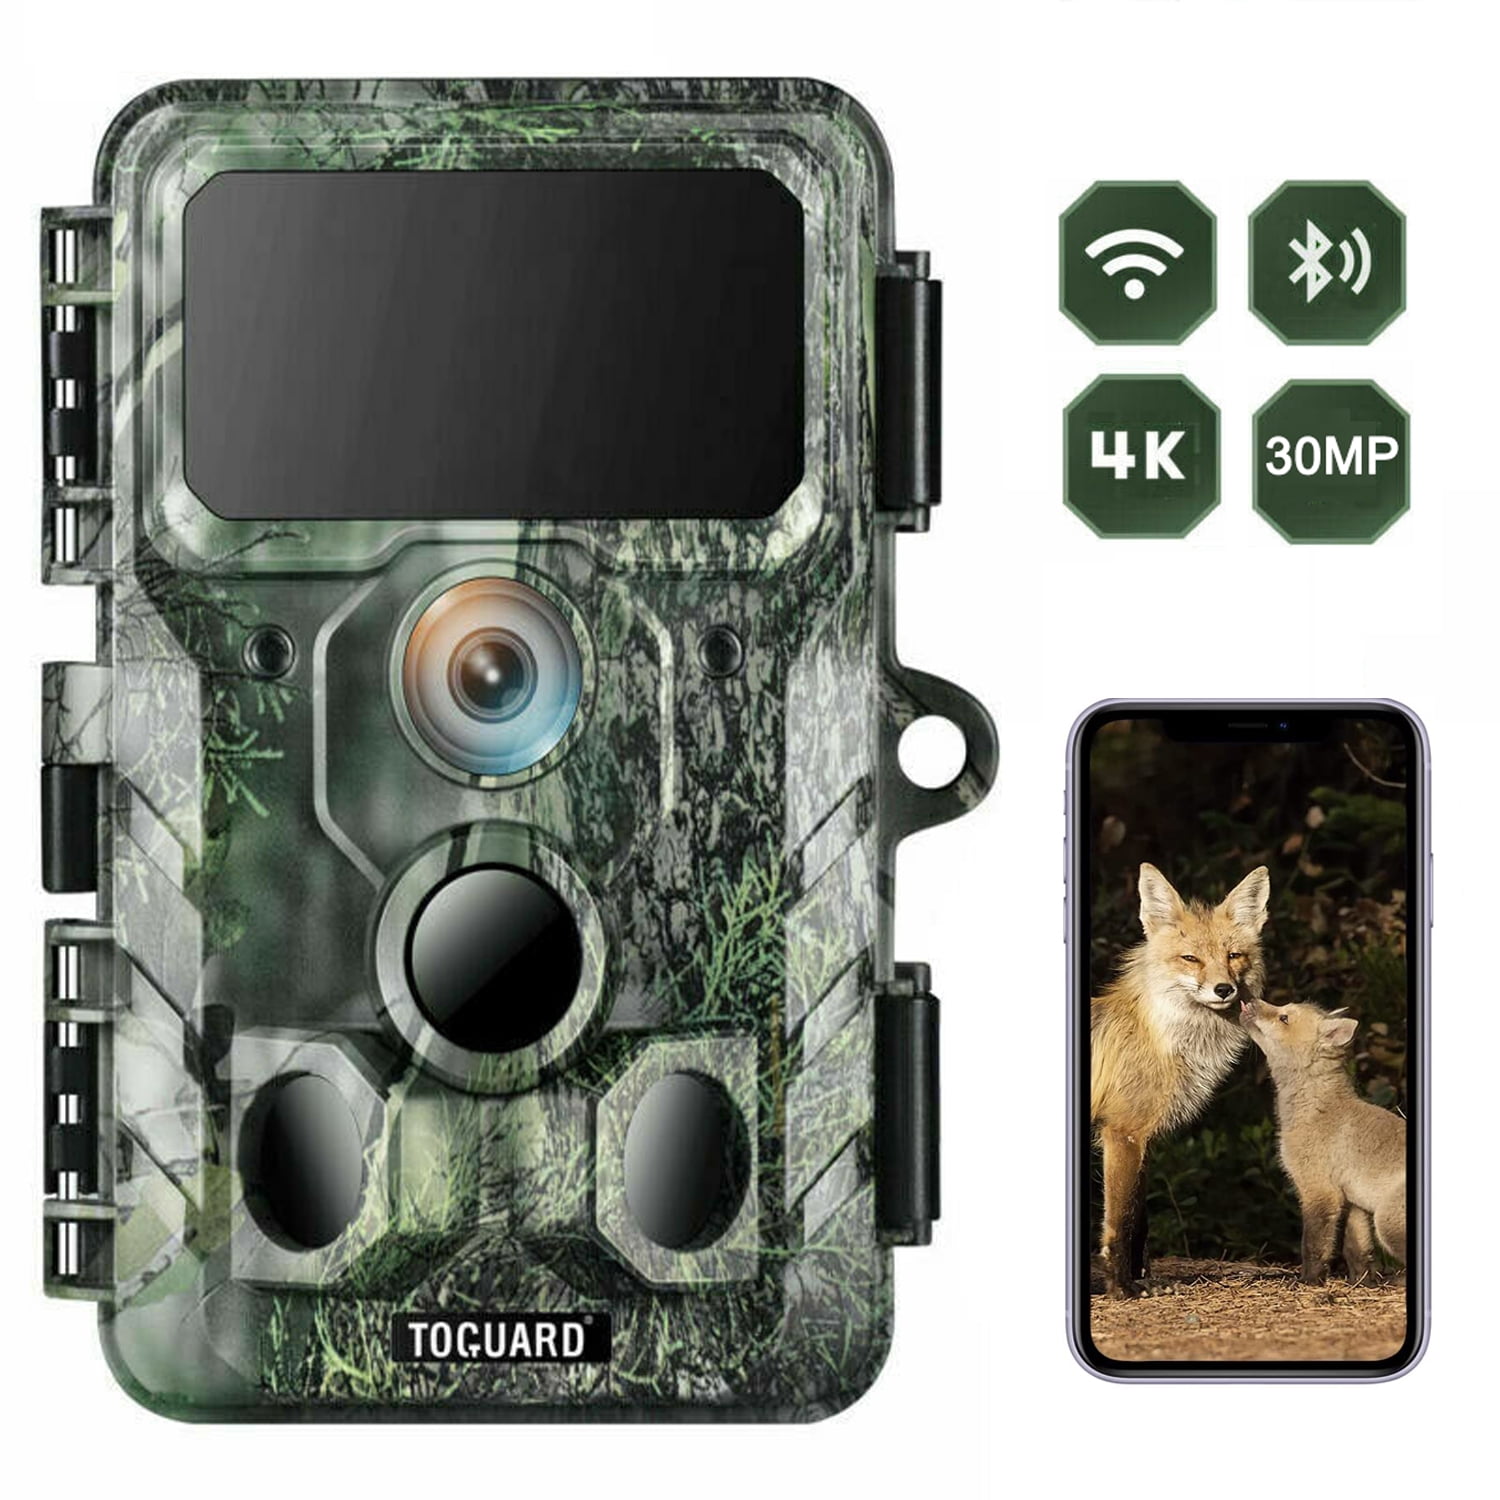 16GB 16MP Trail & Game Hunting Camera 120°Angle IP66 Waterproof SD Card Reader 